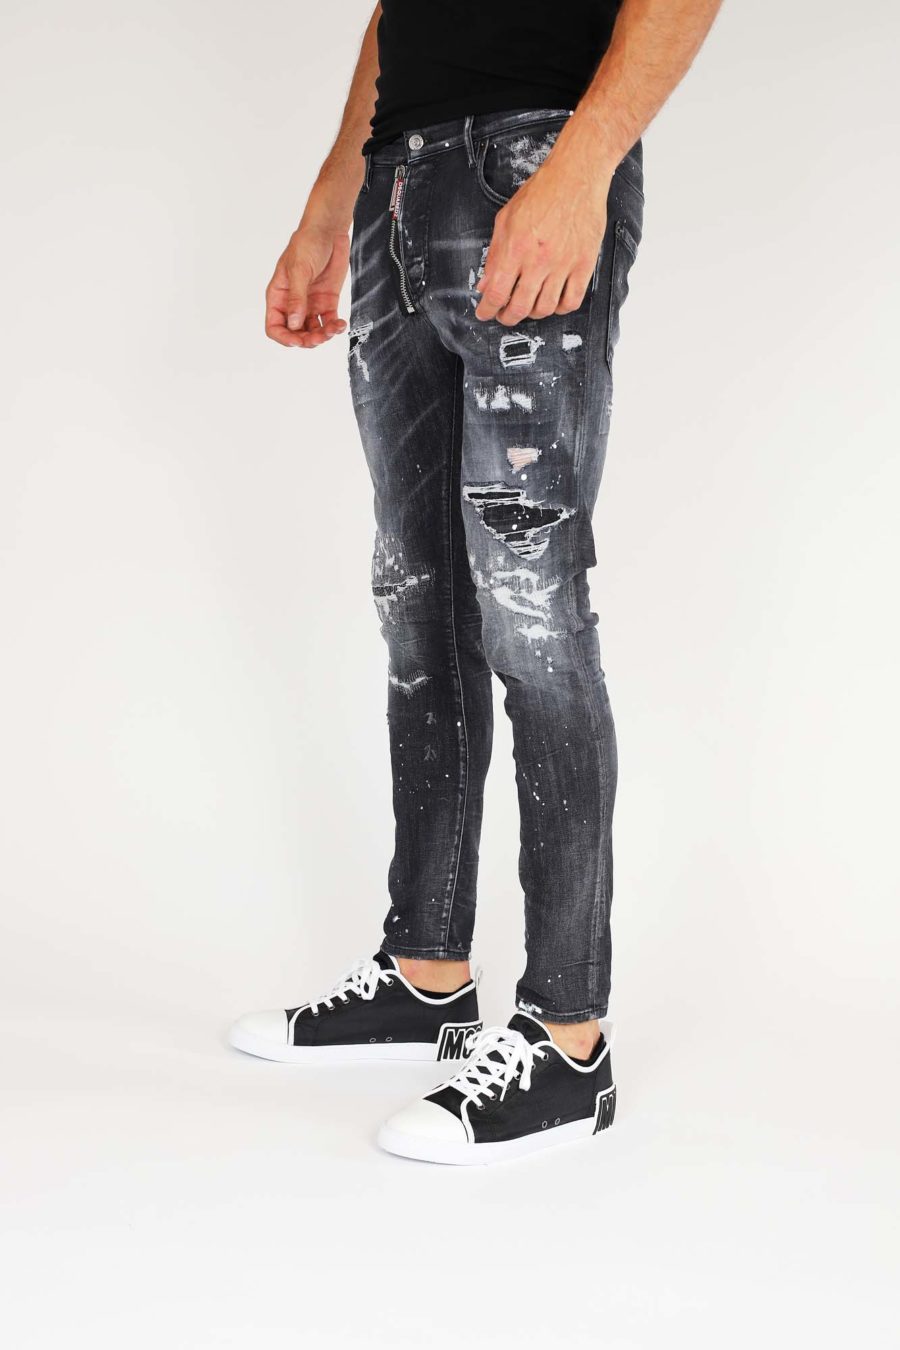 Jeans "Super Twinky Jean" mit Reißverschluss - IMG 9858